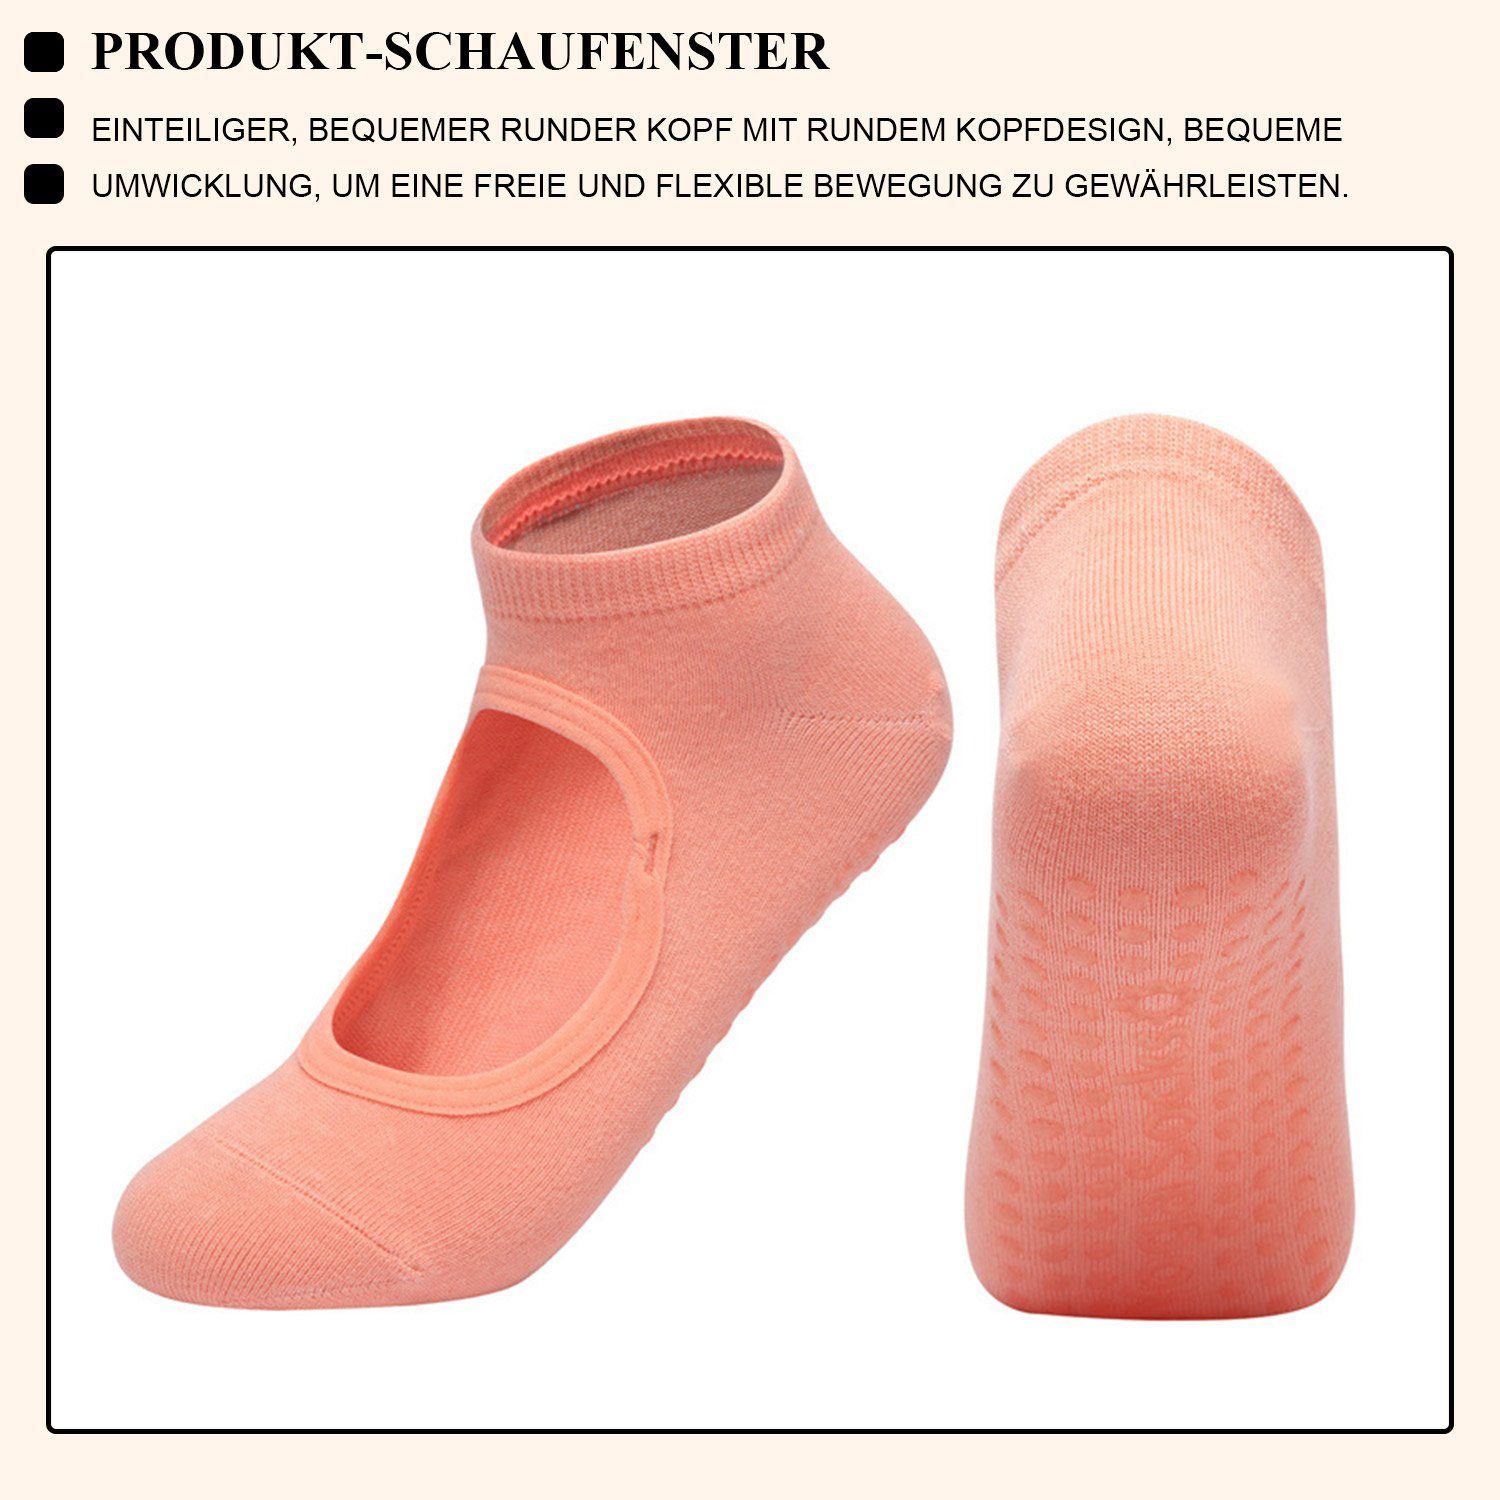 Sock Damen, für Yoga Daisred Socken Pilates Rutschfeste Gelb+Orange+Rosa Sneakersocken 3 Paare